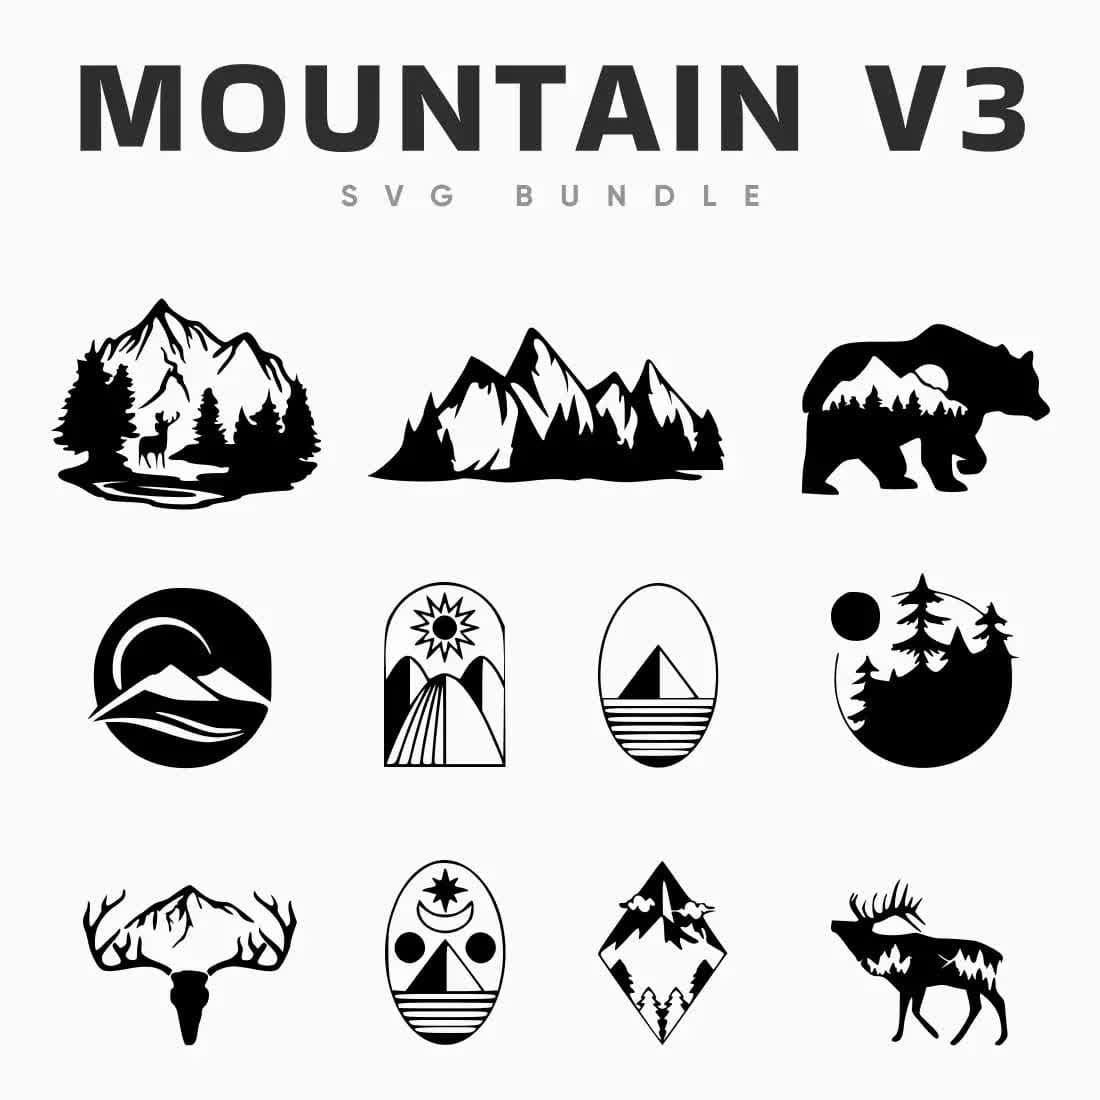 Mountain V3 SVG Bundle Preview 5.